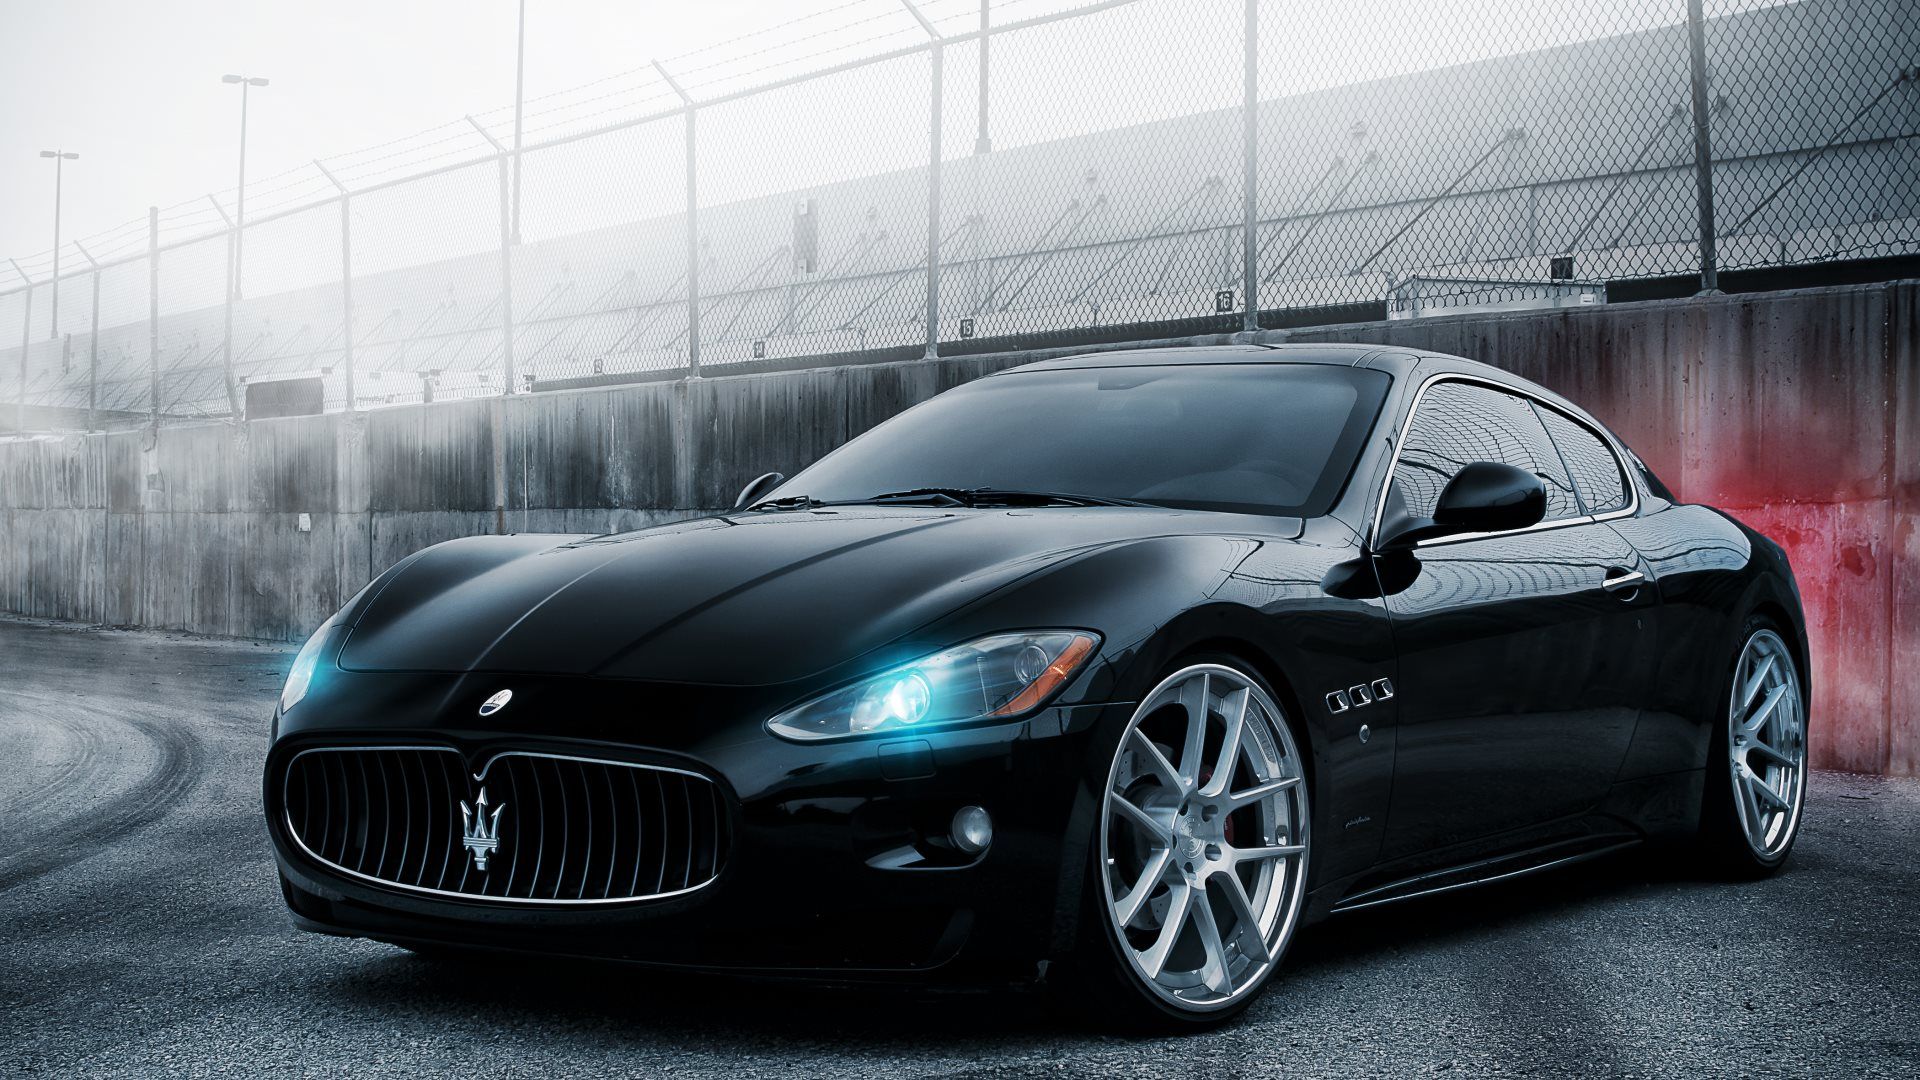 Pictures Of Maserati